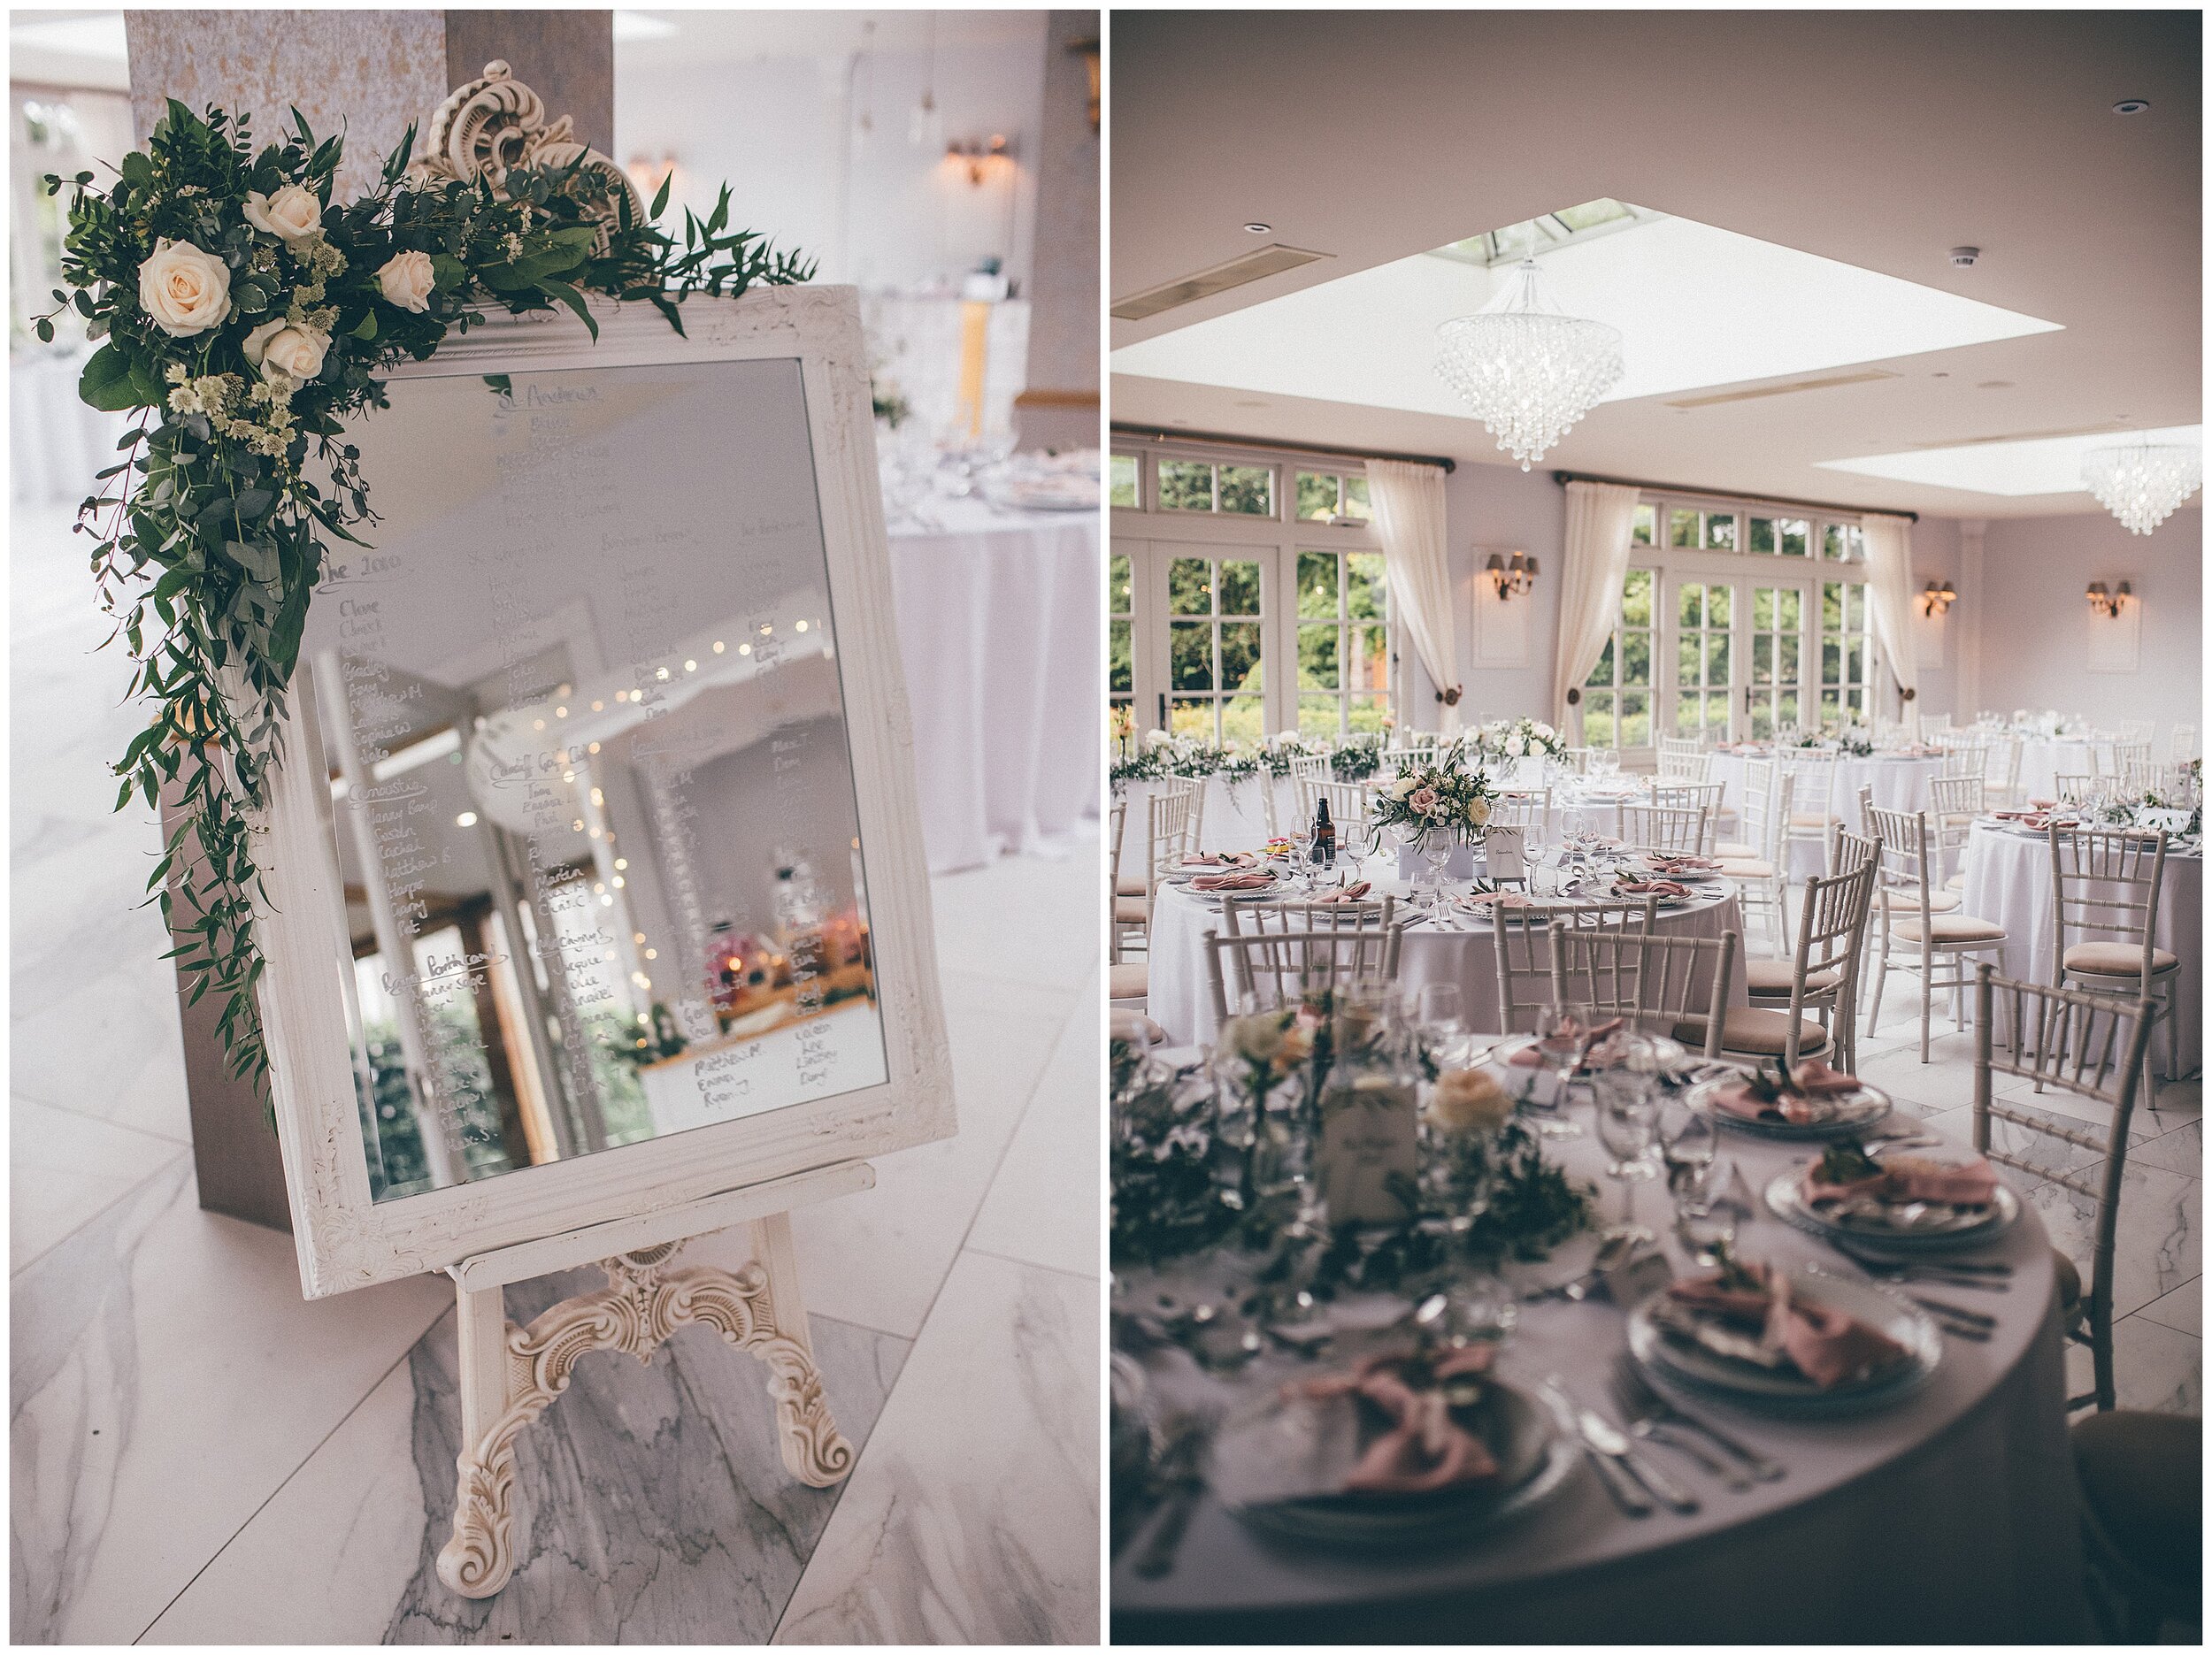 Stunning mirror table plan for beautiful orangery wedding breakfast room at Lemore Manor.